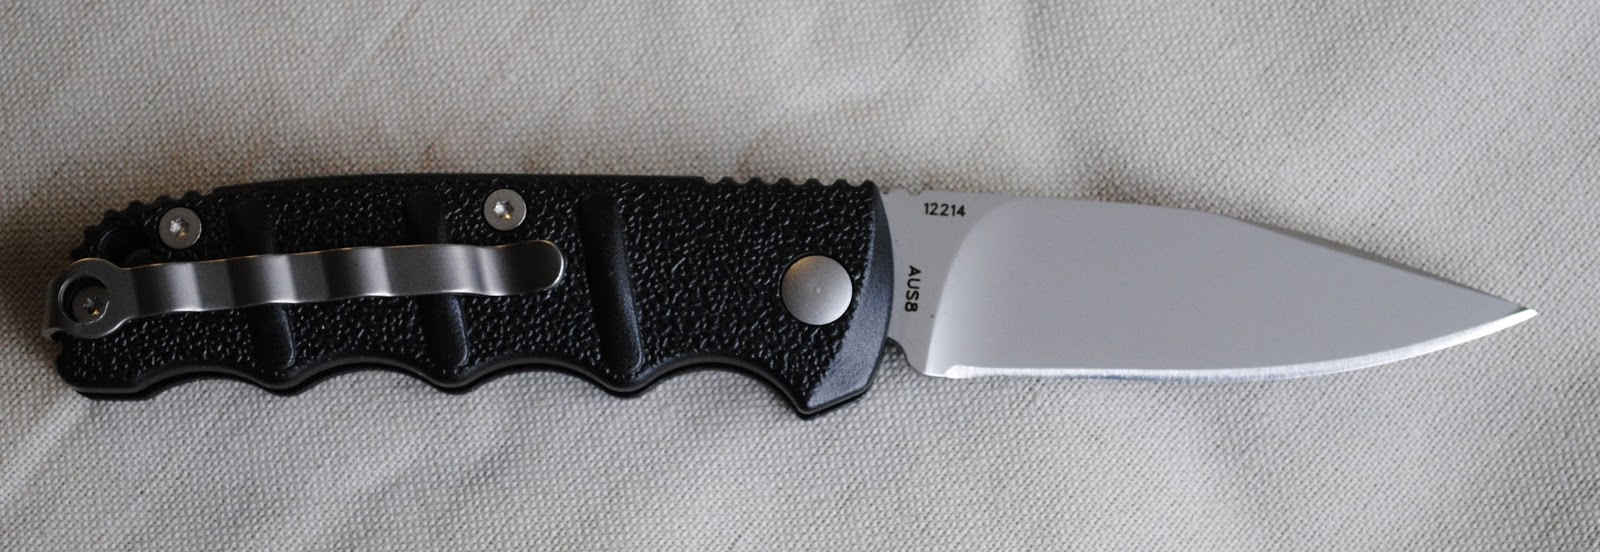 SNAG Folder Plain Edge 2.1, Self Defense Knife